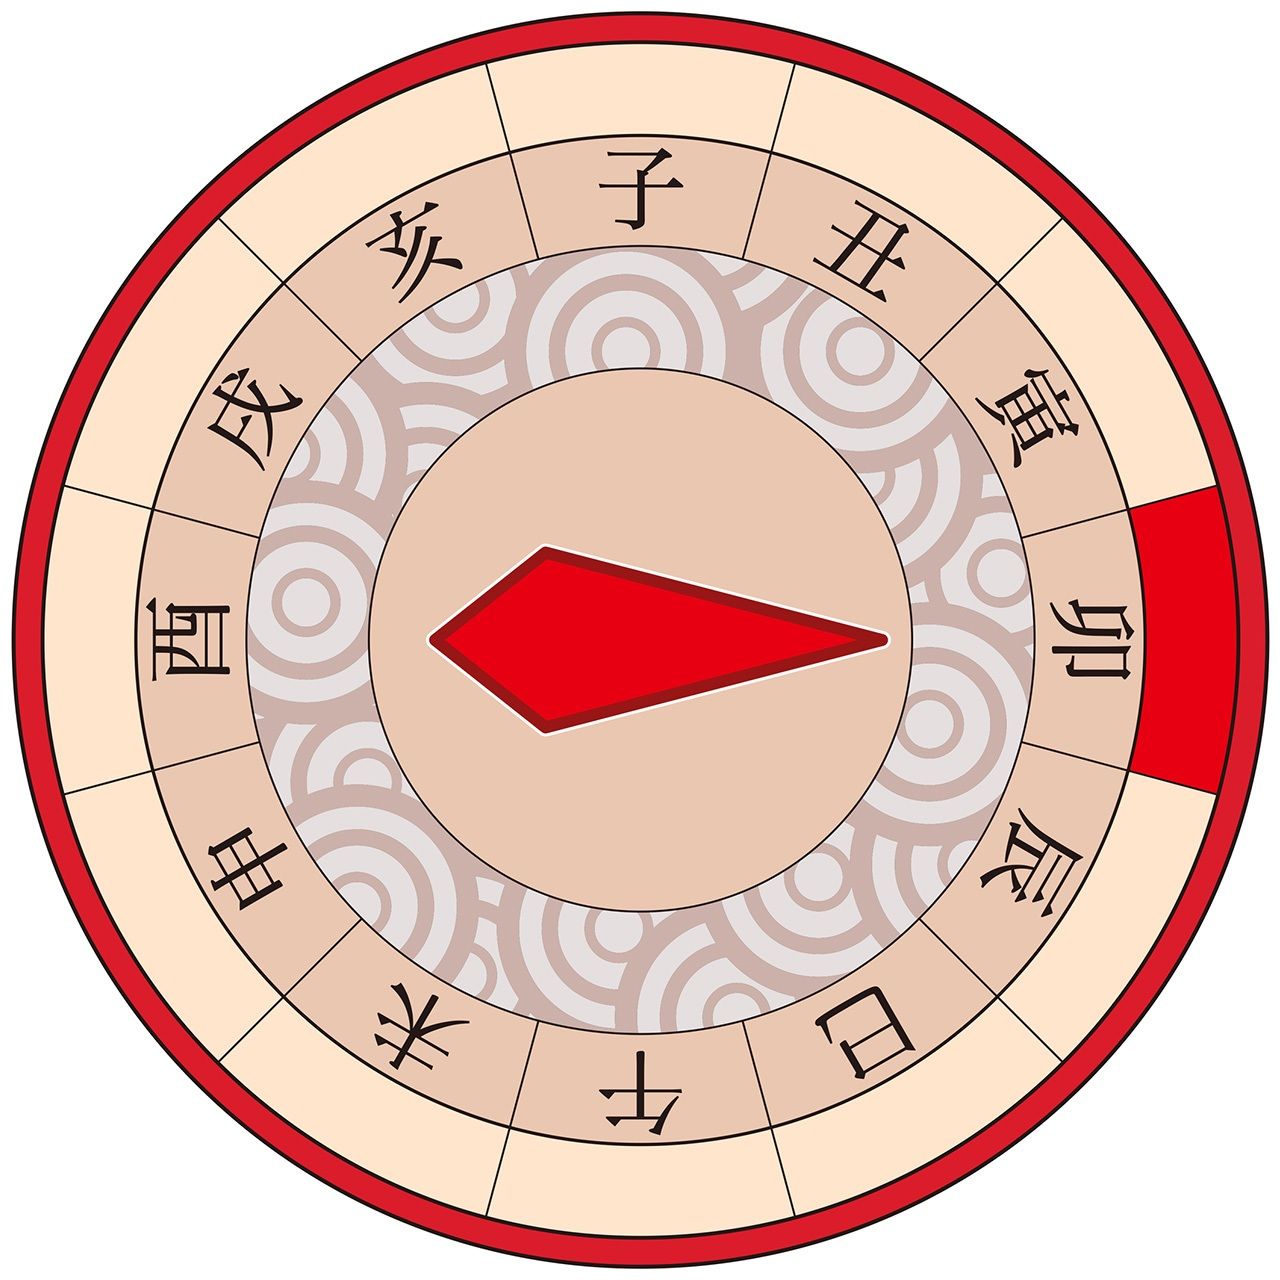 Les douze signes du zodiaque eto. Dans les sens des aiguilles d’une montre en partant du sommet (子). Rat (ne, nezumi). Buffle (ushi). Tigre (tora). Lapin (u, usagi). Dragon (tatsu), Serpent (mi), Cheval (uma). Mouton (mi, hitsuji). Singe (saru). Coq (tori). Chien (inu). Sanglier (i, inoshishi).